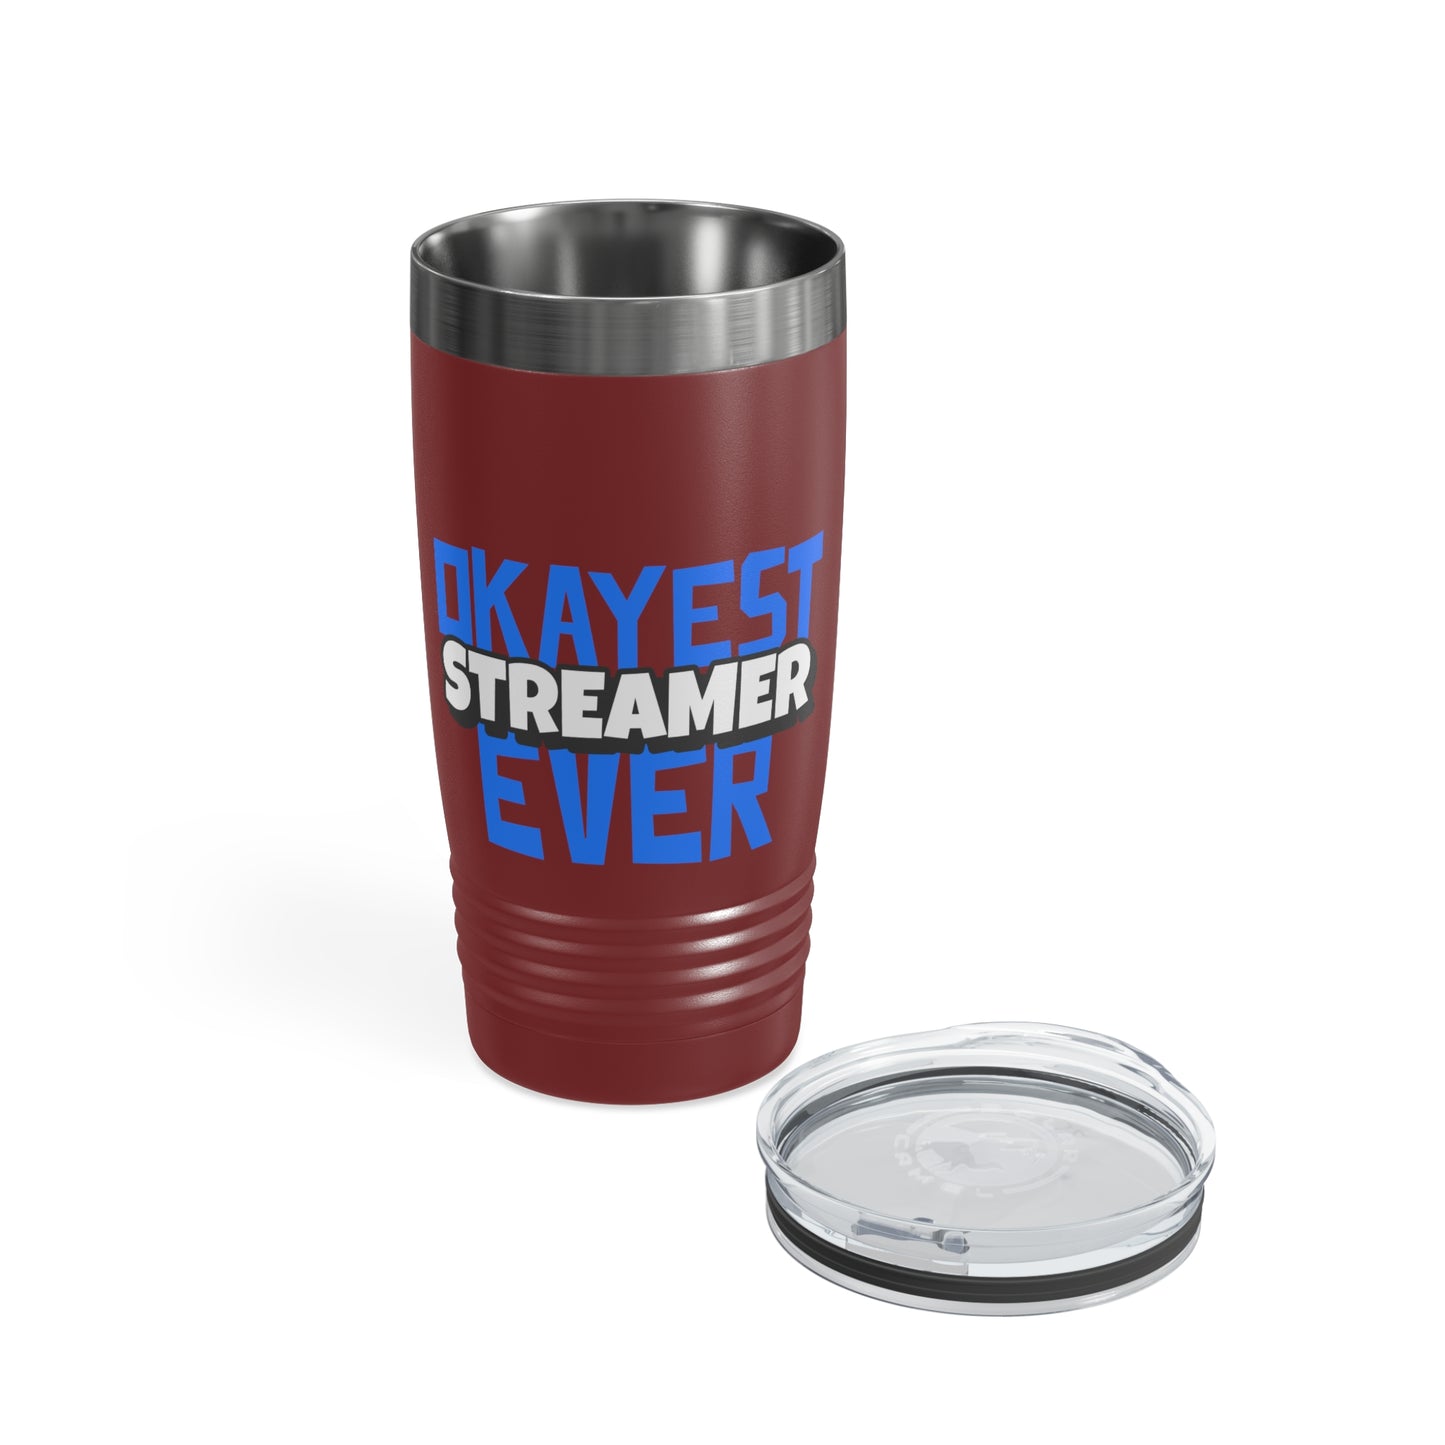 "Okayest Streamer Ever" - Funny - Tumbler, 20oz